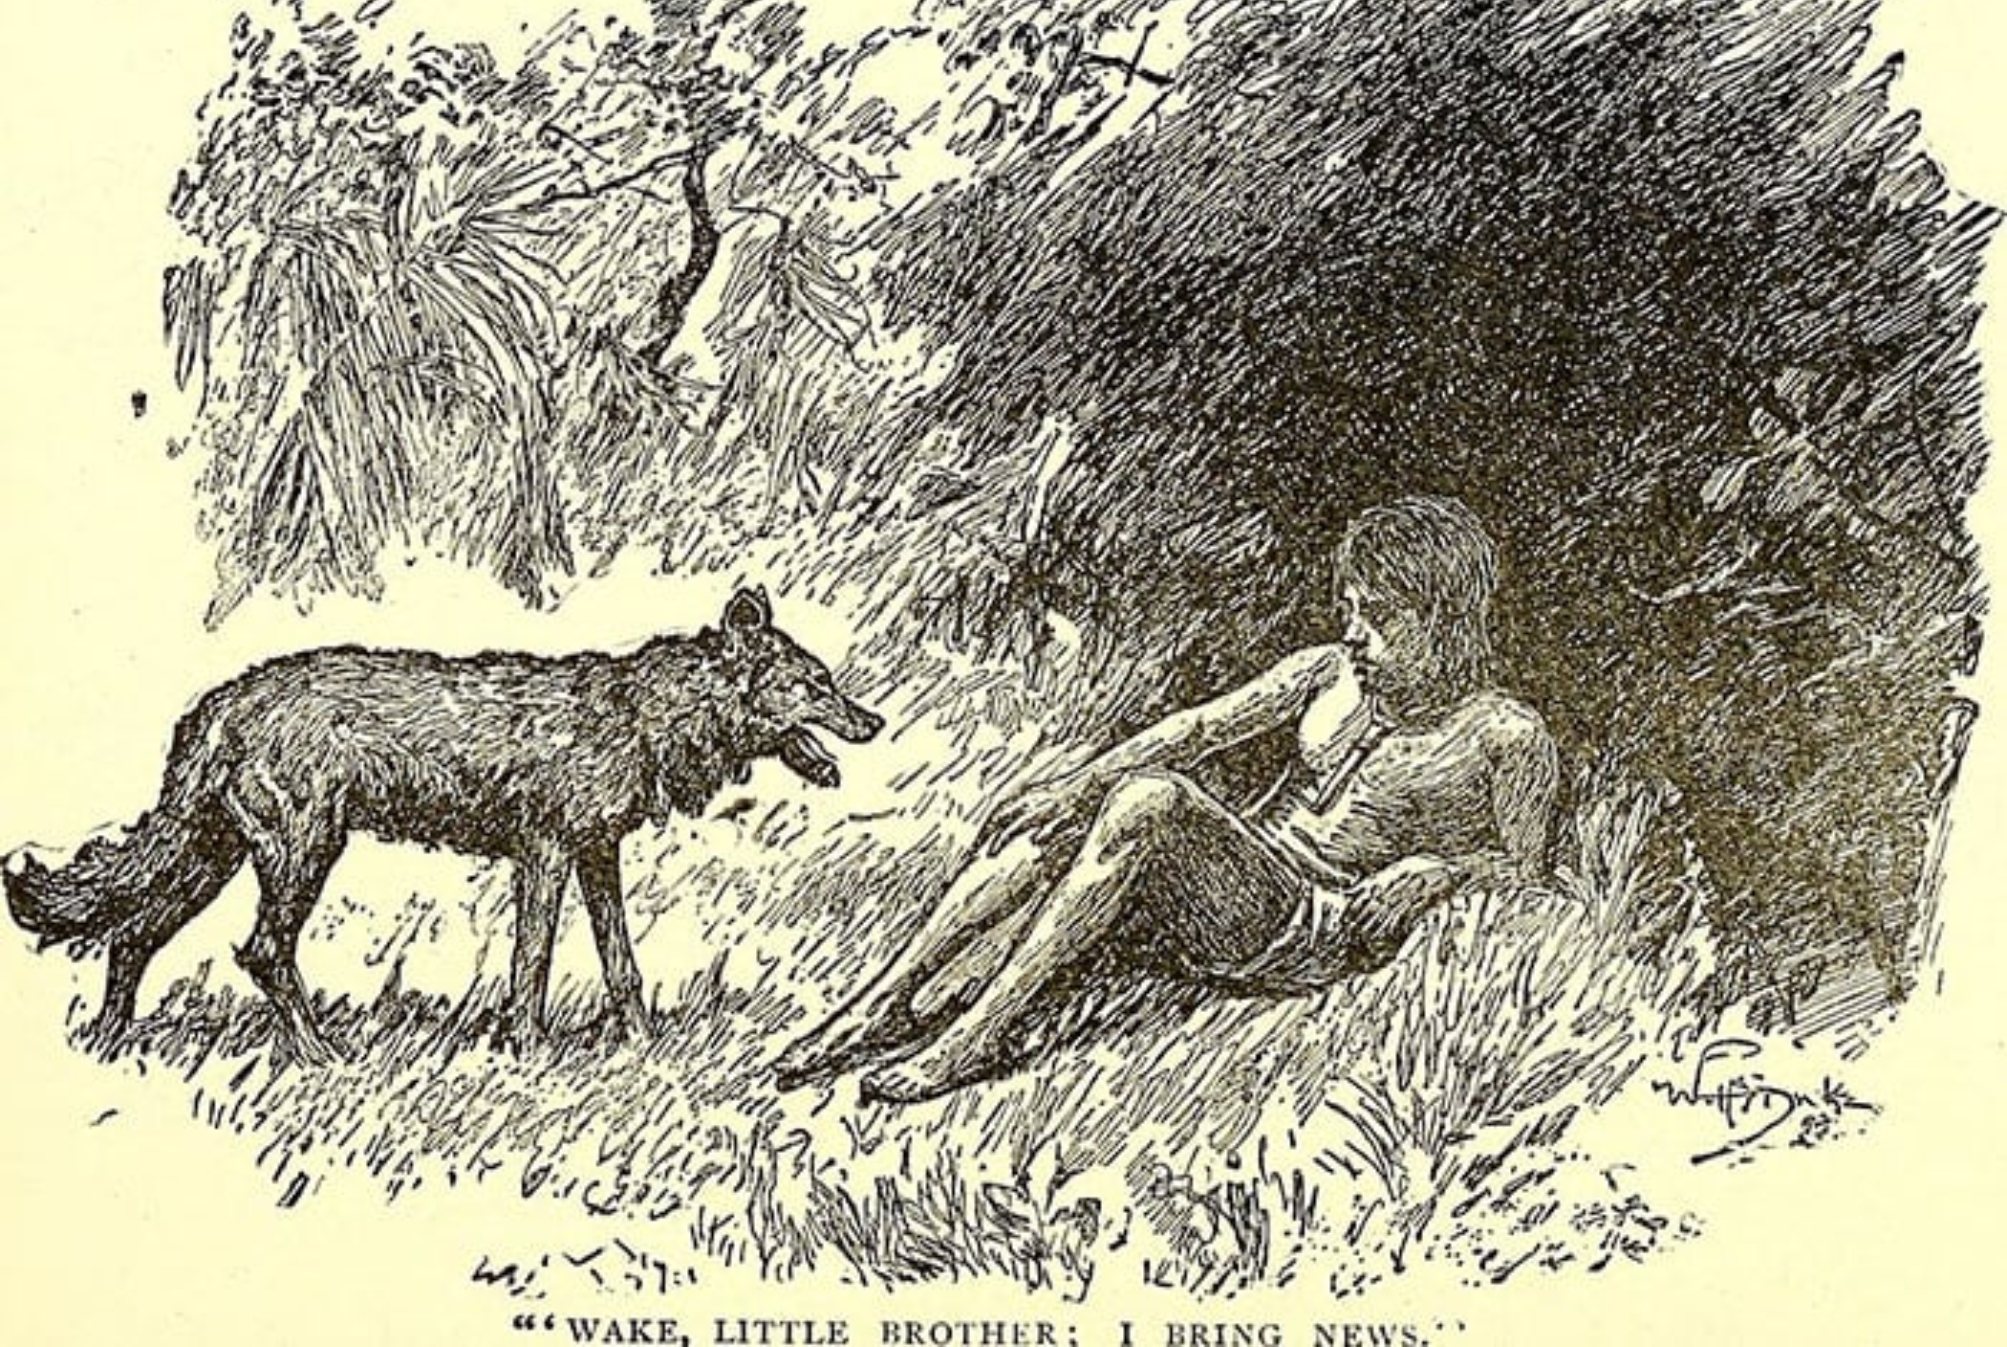 Dina Sanichar ο αληθινός Μόγλης: Το άγριο αγόρι που μεγάλωσαν λύκοι και ενέπνευσε τον Ράντγιαρντ Κίπλινγκ για να γράψει το Βιβλίο της Ζούγκλας